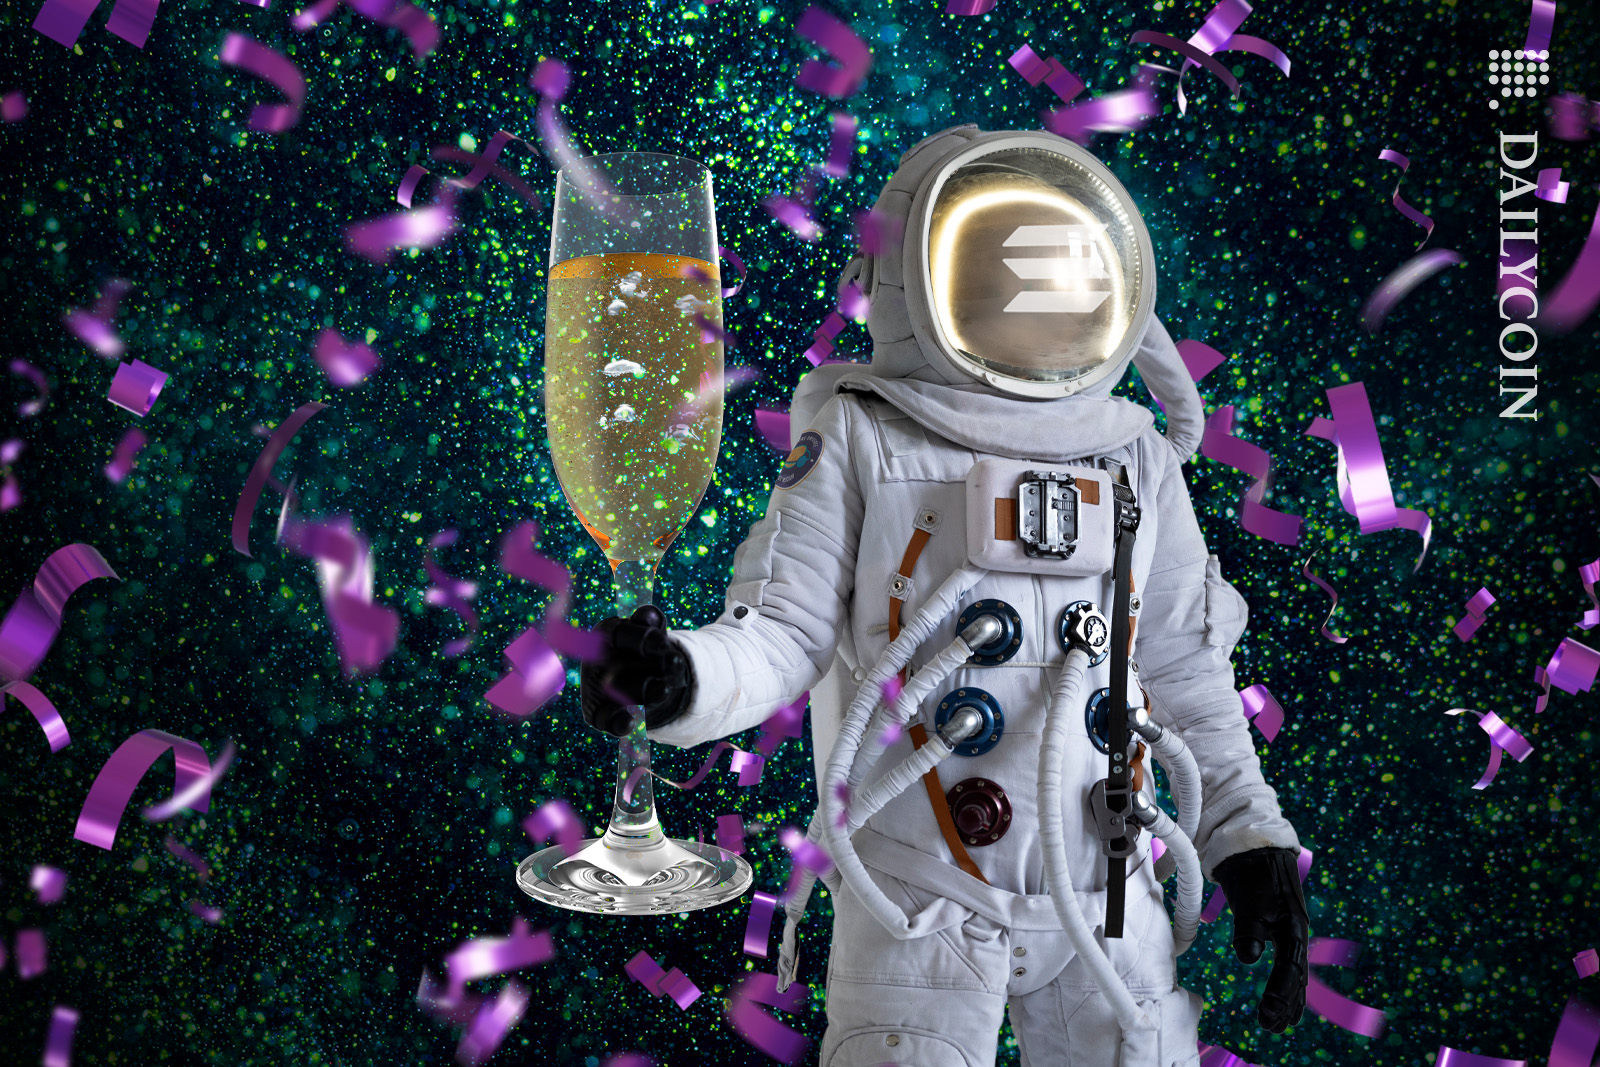 Solana astronaut celebrating with champaigne.